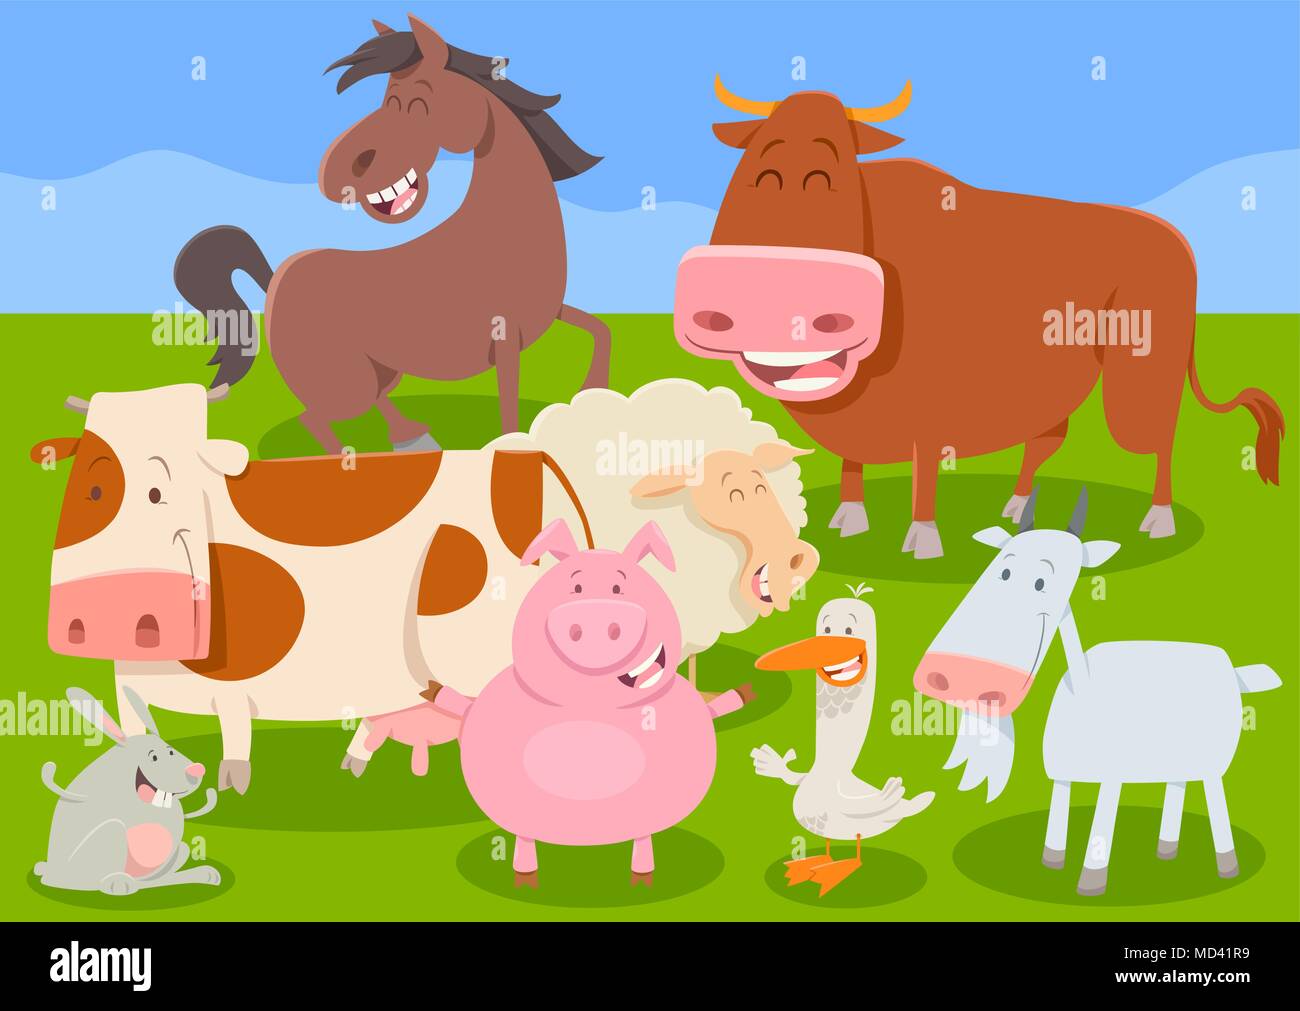 Cartoon Illustration of Farm Animal or Livestock Characters Group Stock Vector